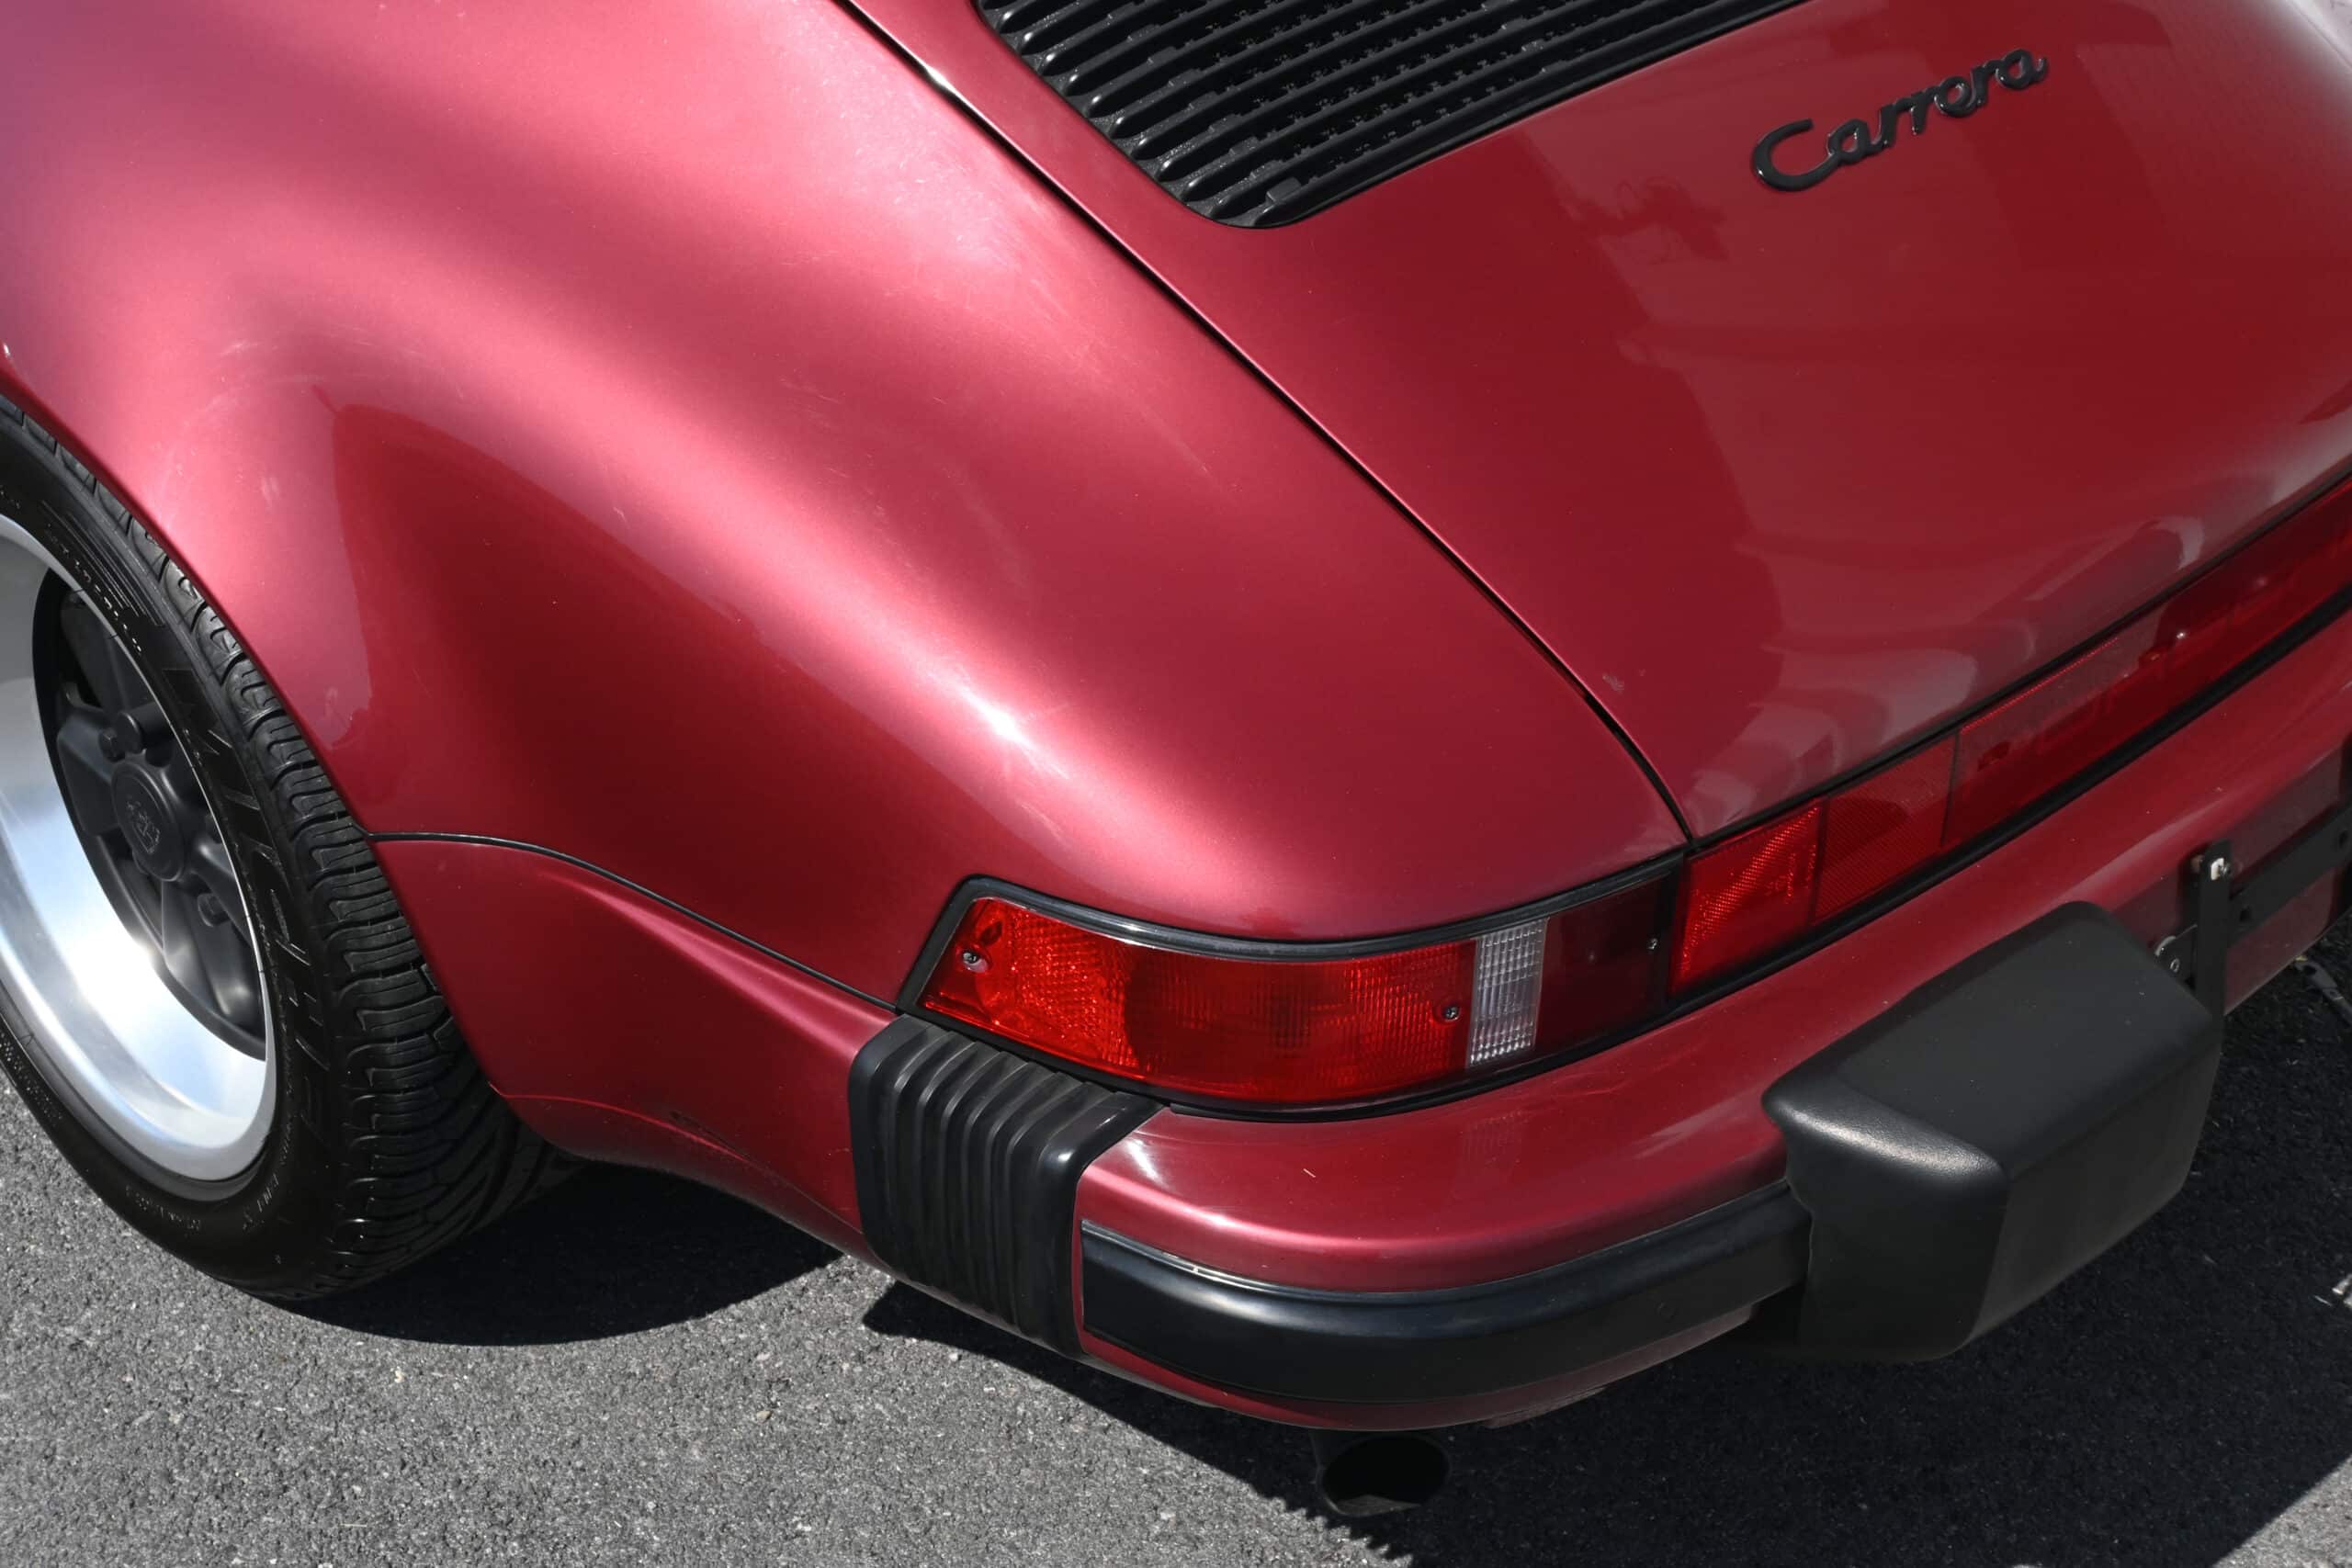 1989 Porsche 911 Carrera G50 Transmission, last year Carrera, 47K actual miles, rare Velvet Red metallic